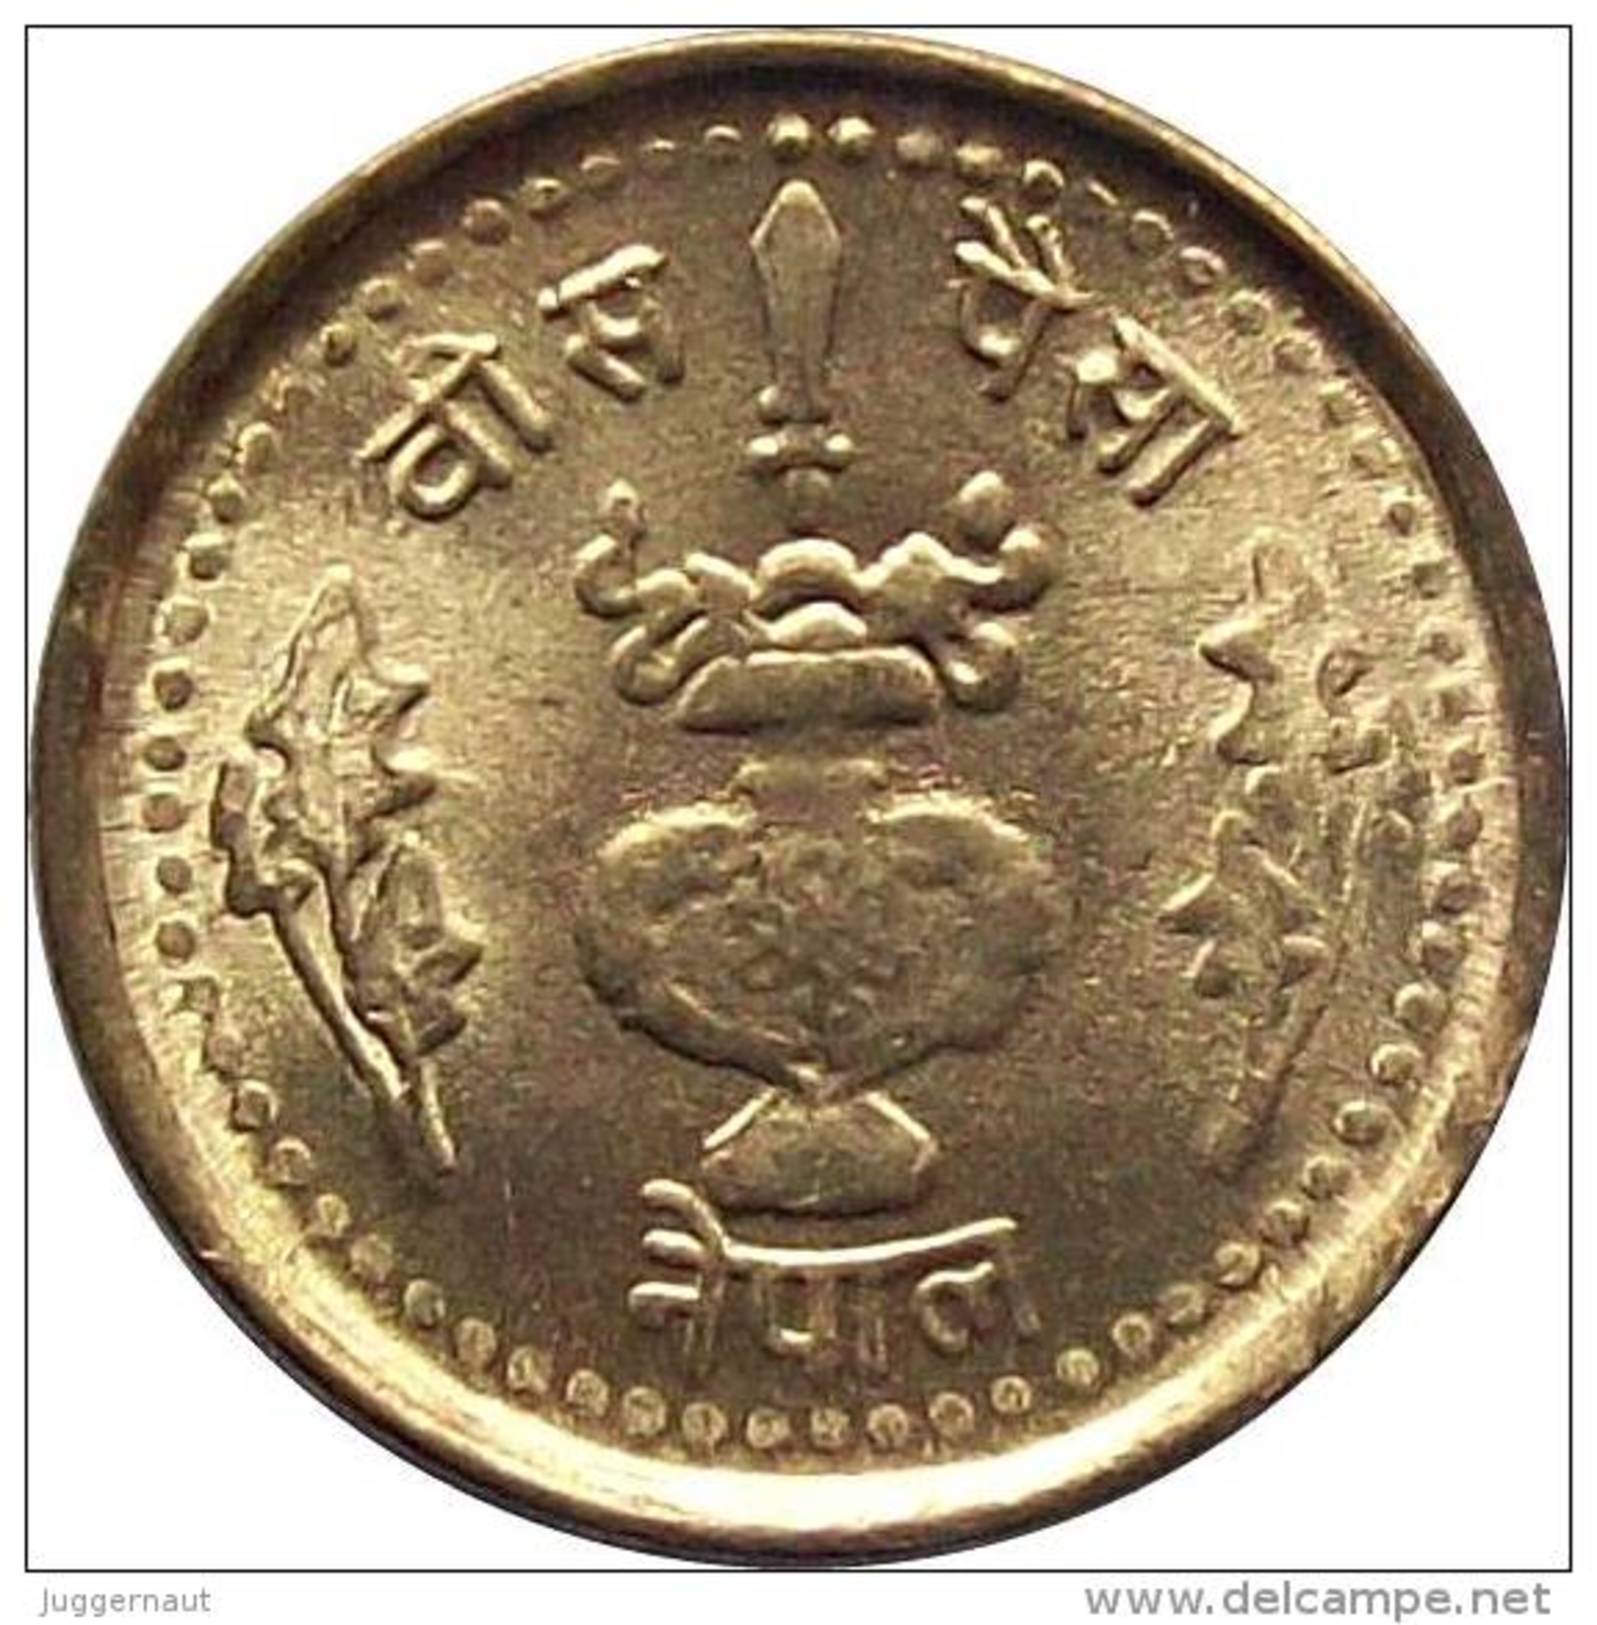 NEPAL 20 PAISA REGULAR CIRCULATION BRASS COIN NEPAL 1978 AD KM-813 UNCIRCULATED UNC - Nepal